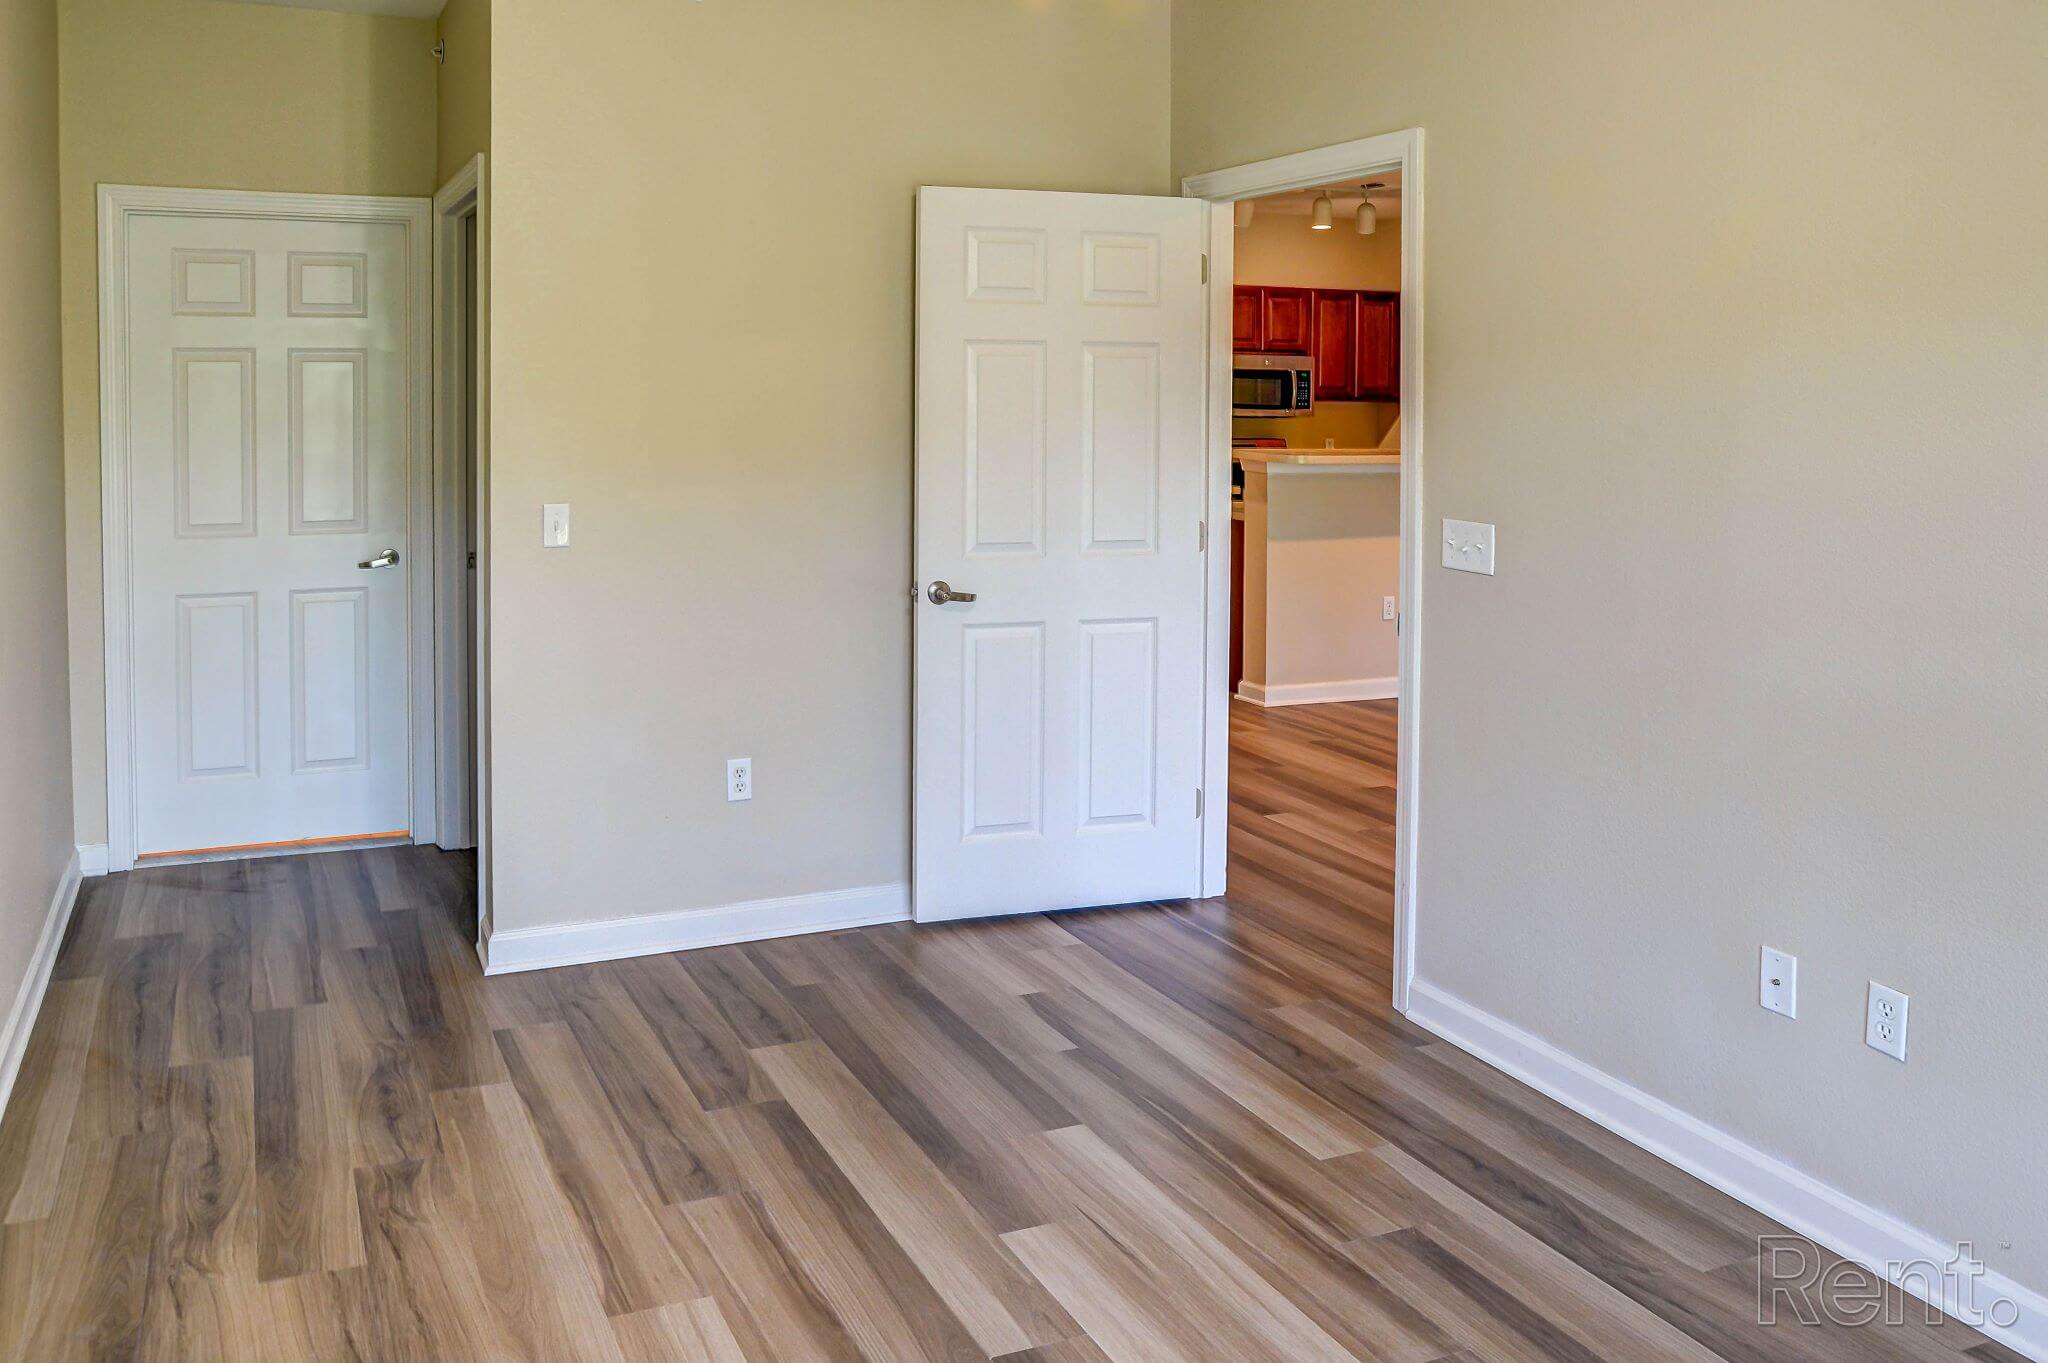 Apartment Interior with wood flooring